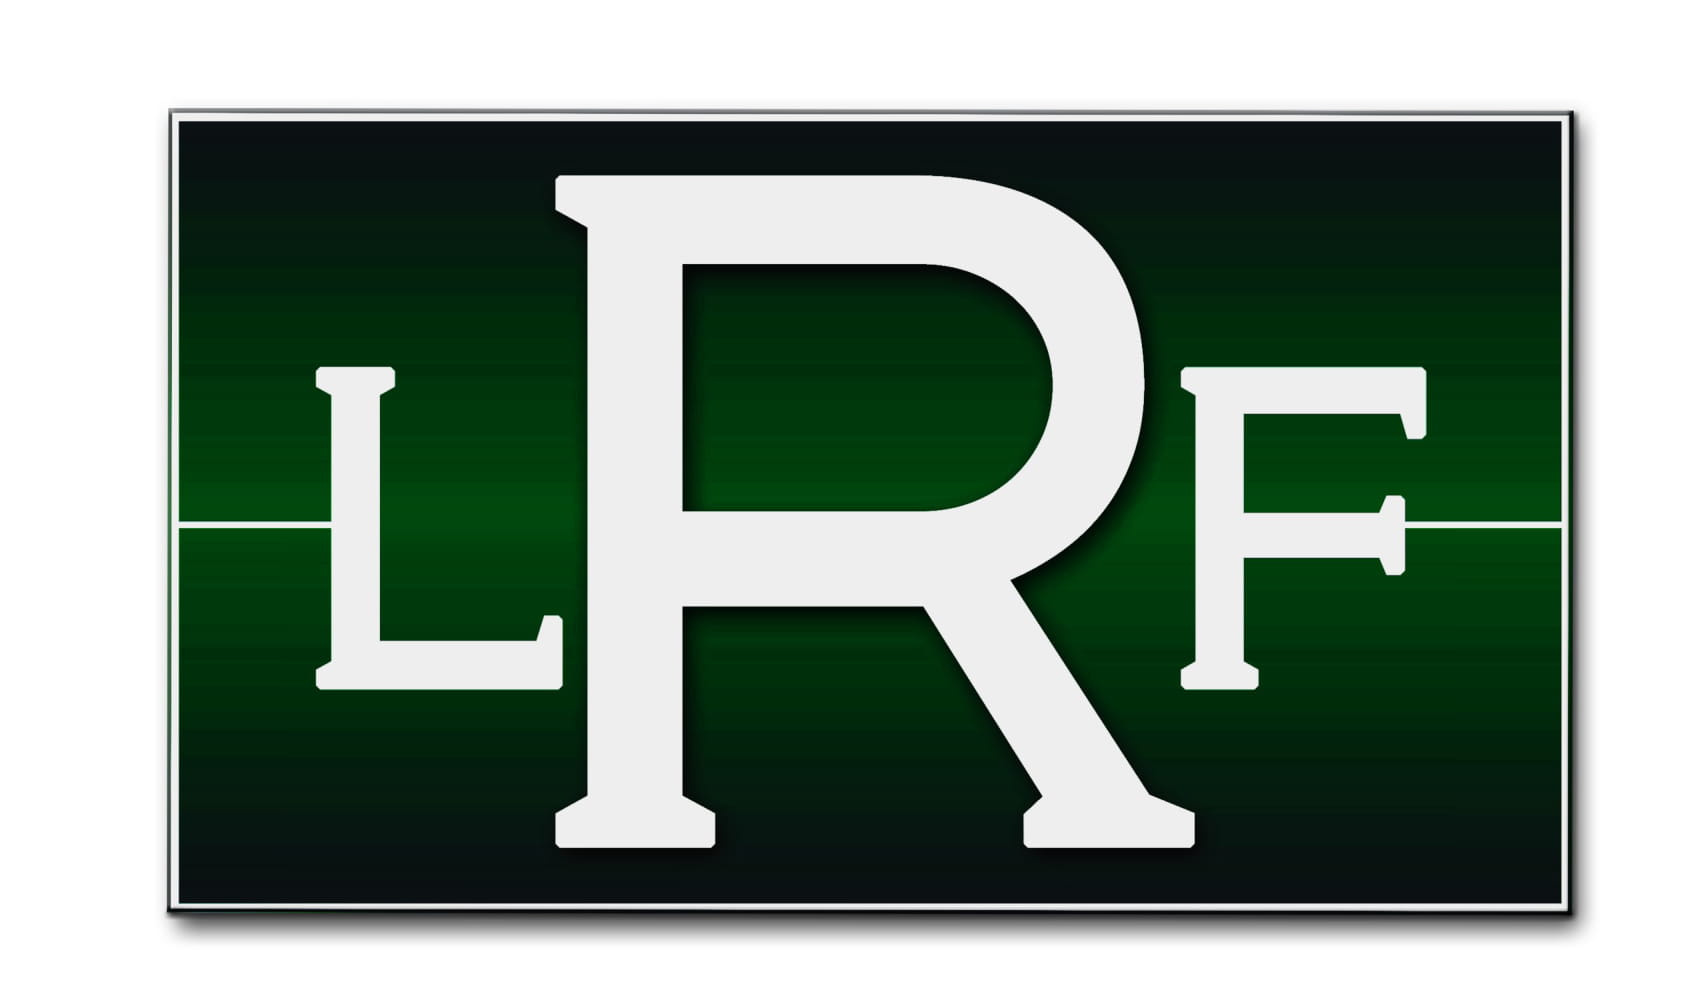 LRF Sponsor